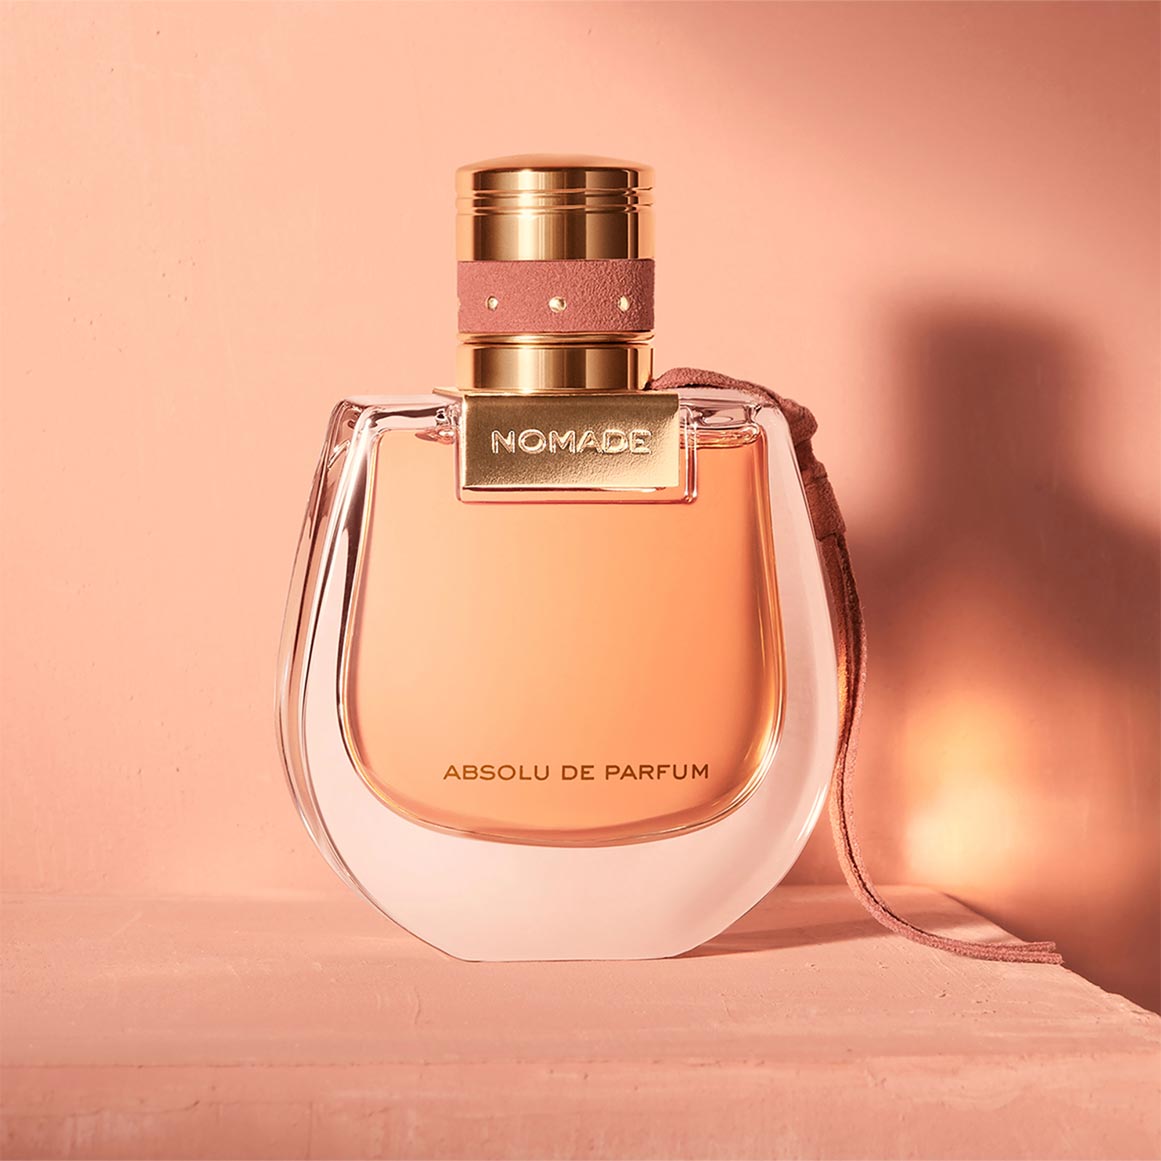 Chloé Nomade Absolu de Parfum | My Perfume Shop Australia